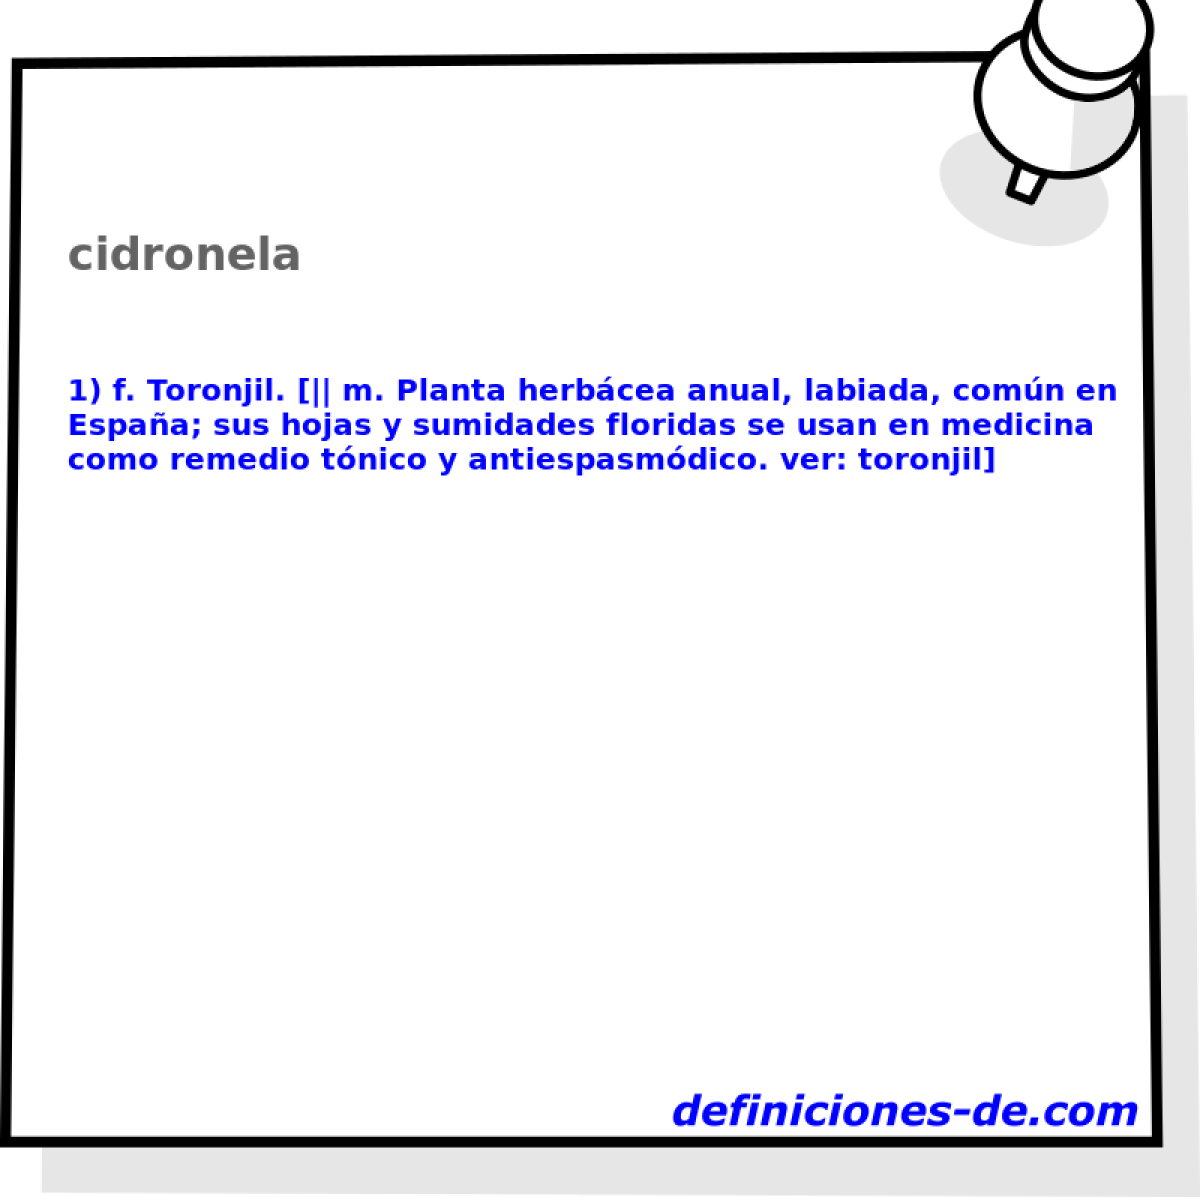 cidronela 